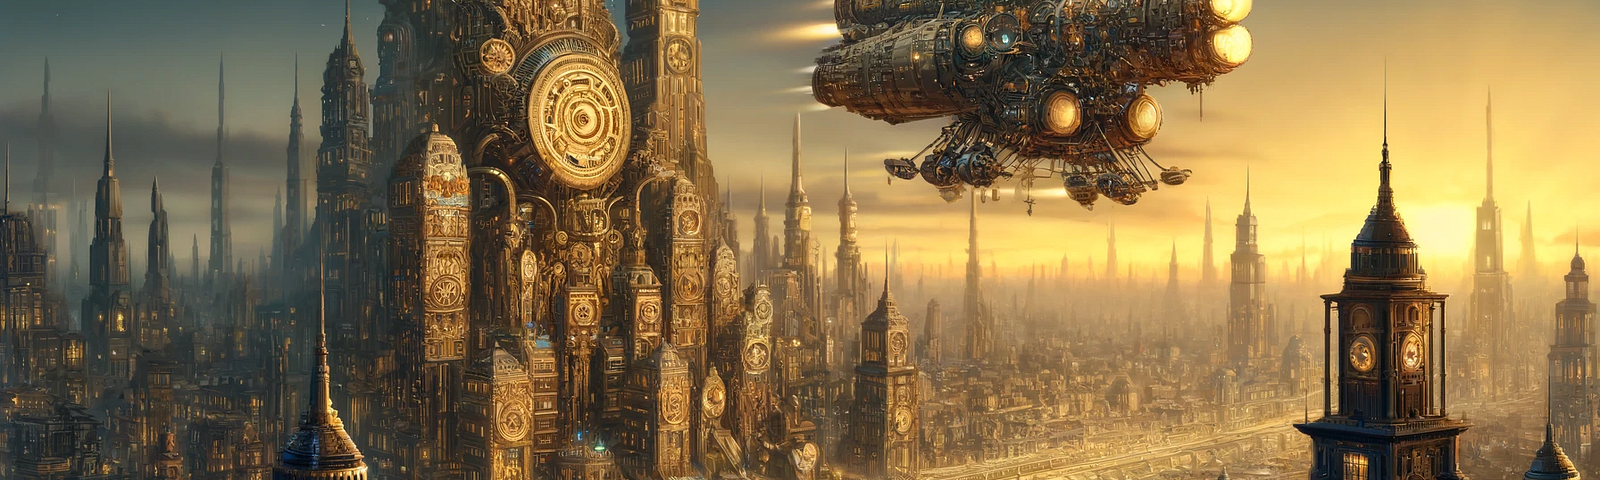 A hjovercraft flies over a futuristic steampunk cityscape.